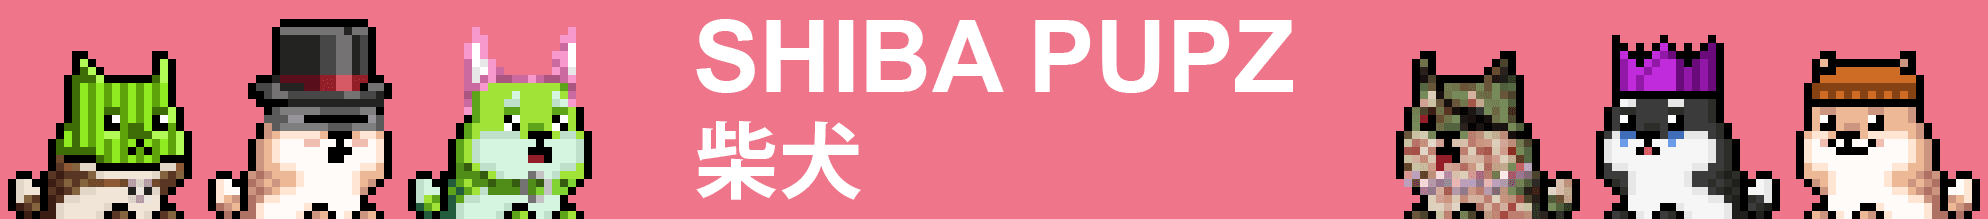 ShibaPupzVault banner